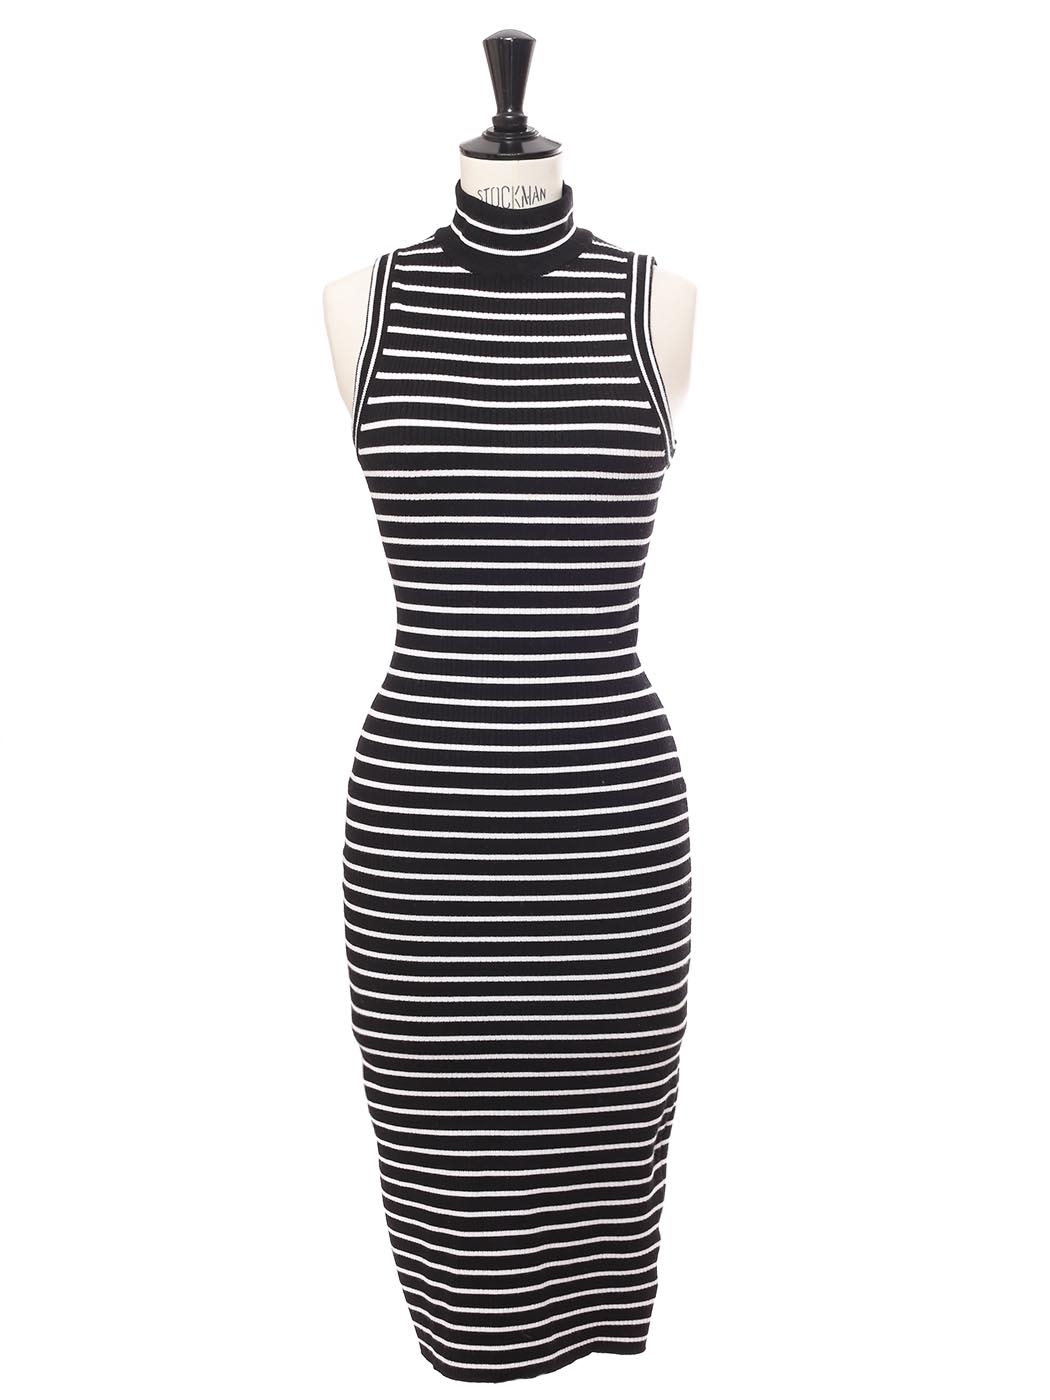 michael kors black and white striped dress